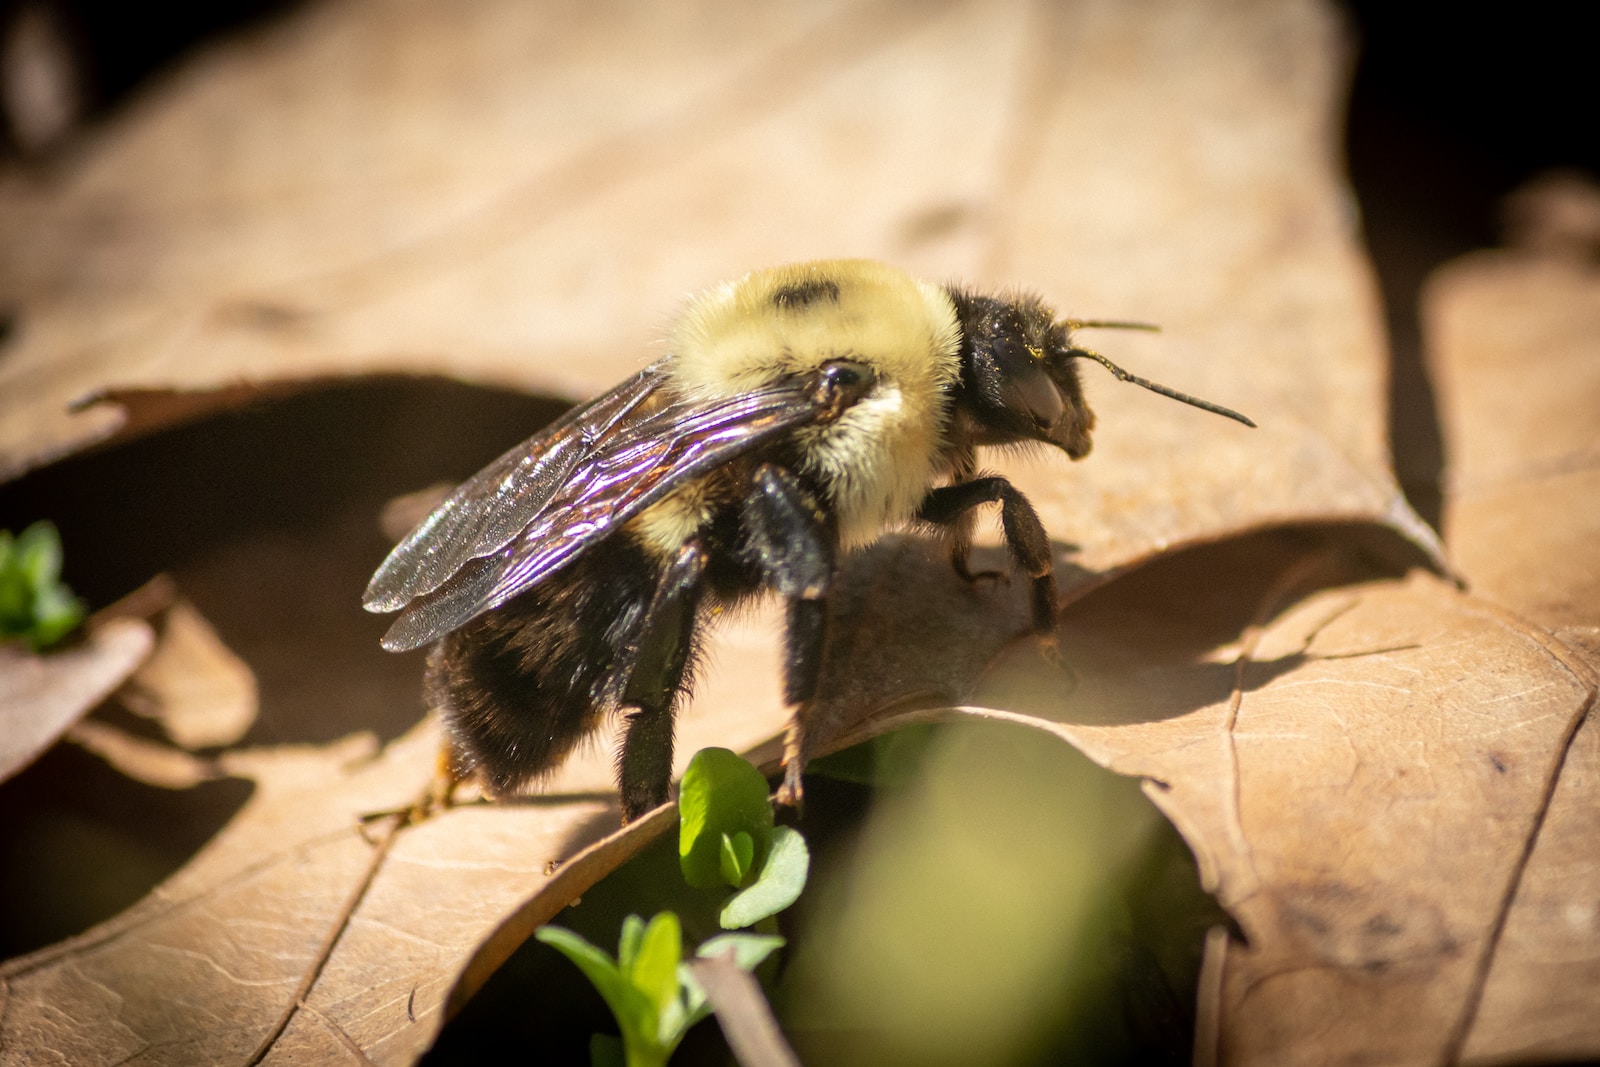 Does Carpenter Bees Make Honey?